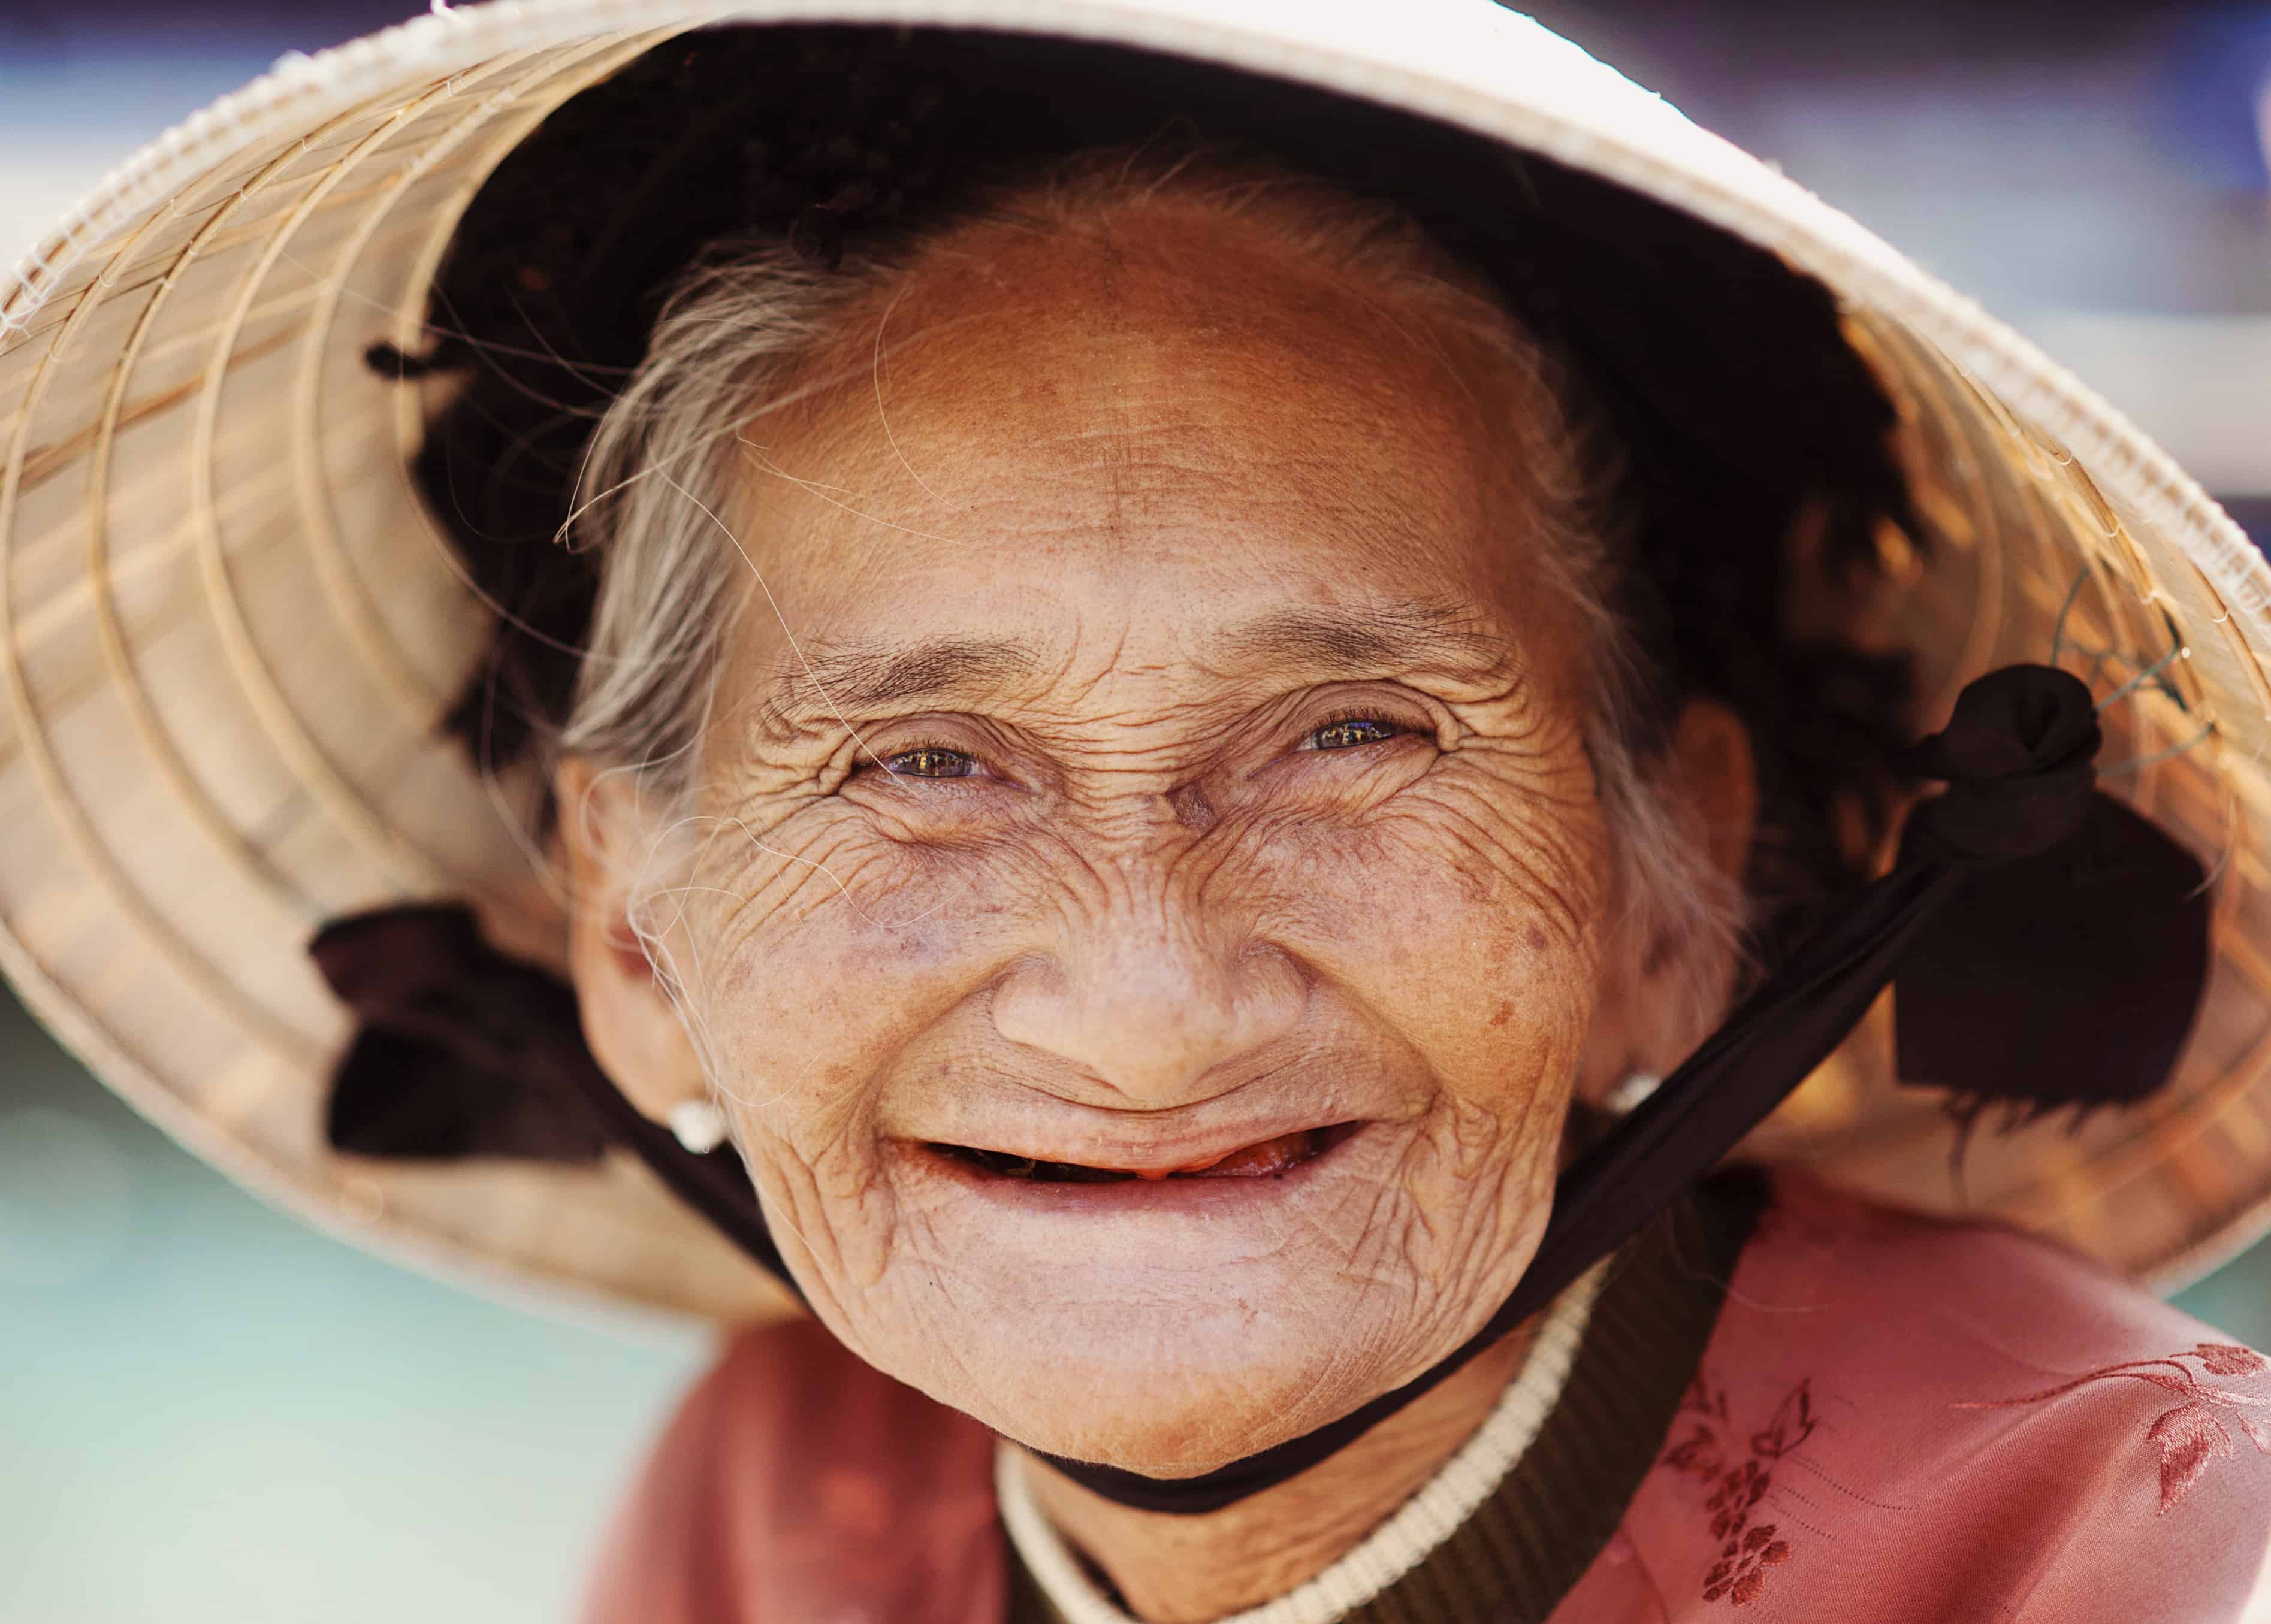 Бабушка азиат. Бабка улыбается. Старуха улыбается. Улыбка старухи. Старая женщина улыбается.